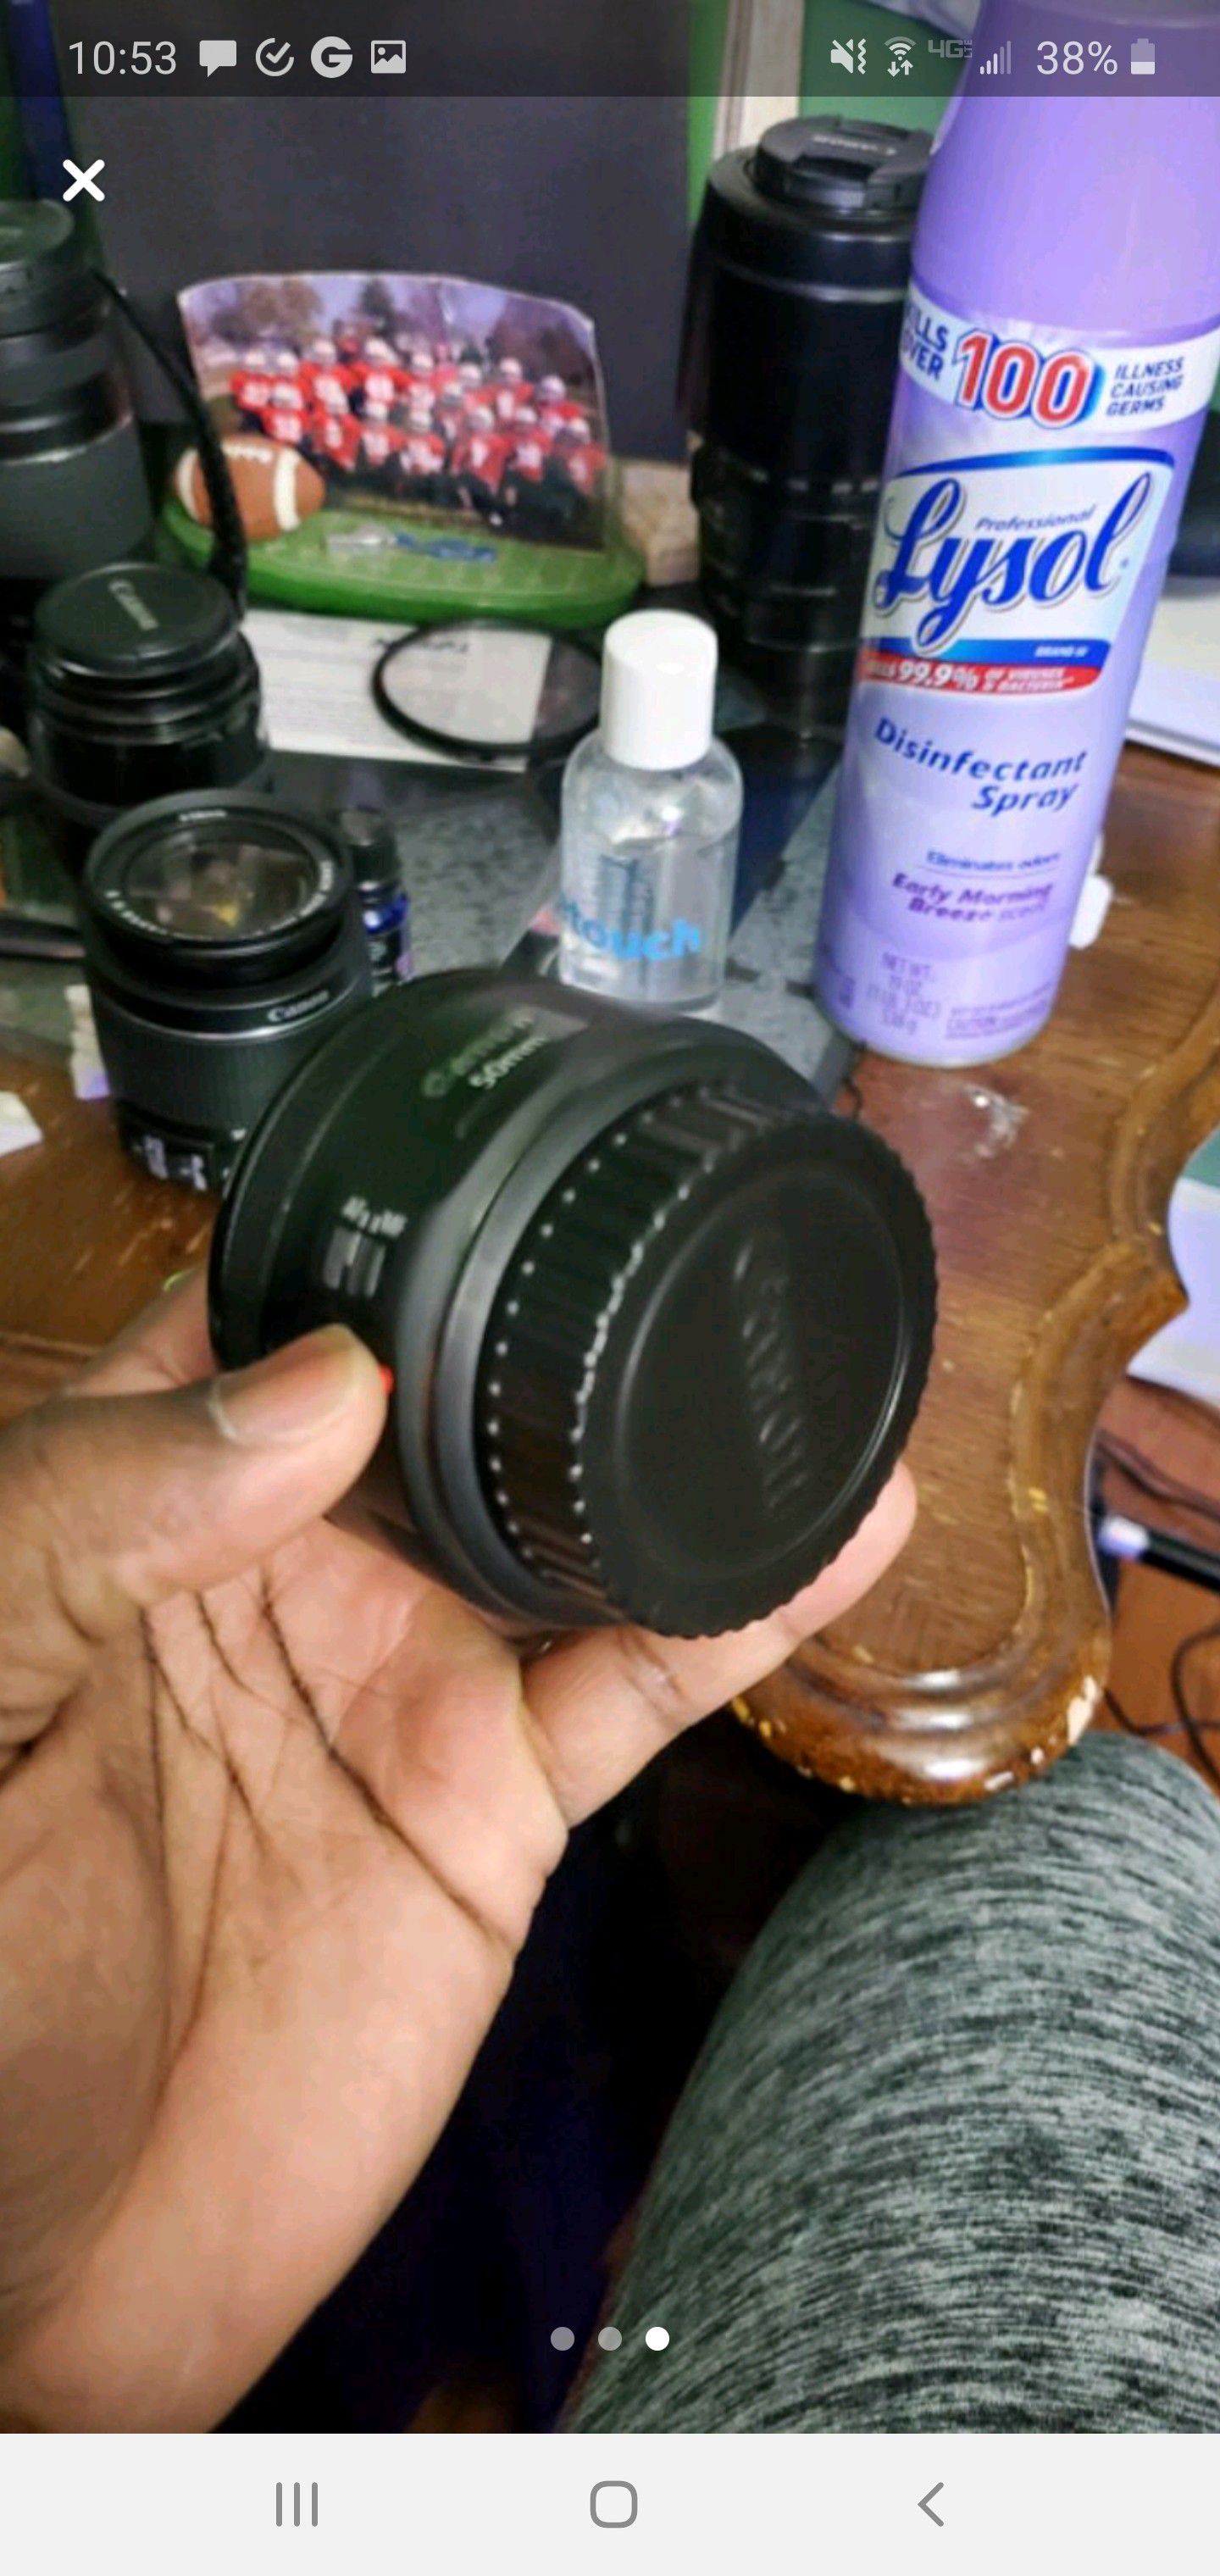 Canon 50mm mark 1 1.8 lens